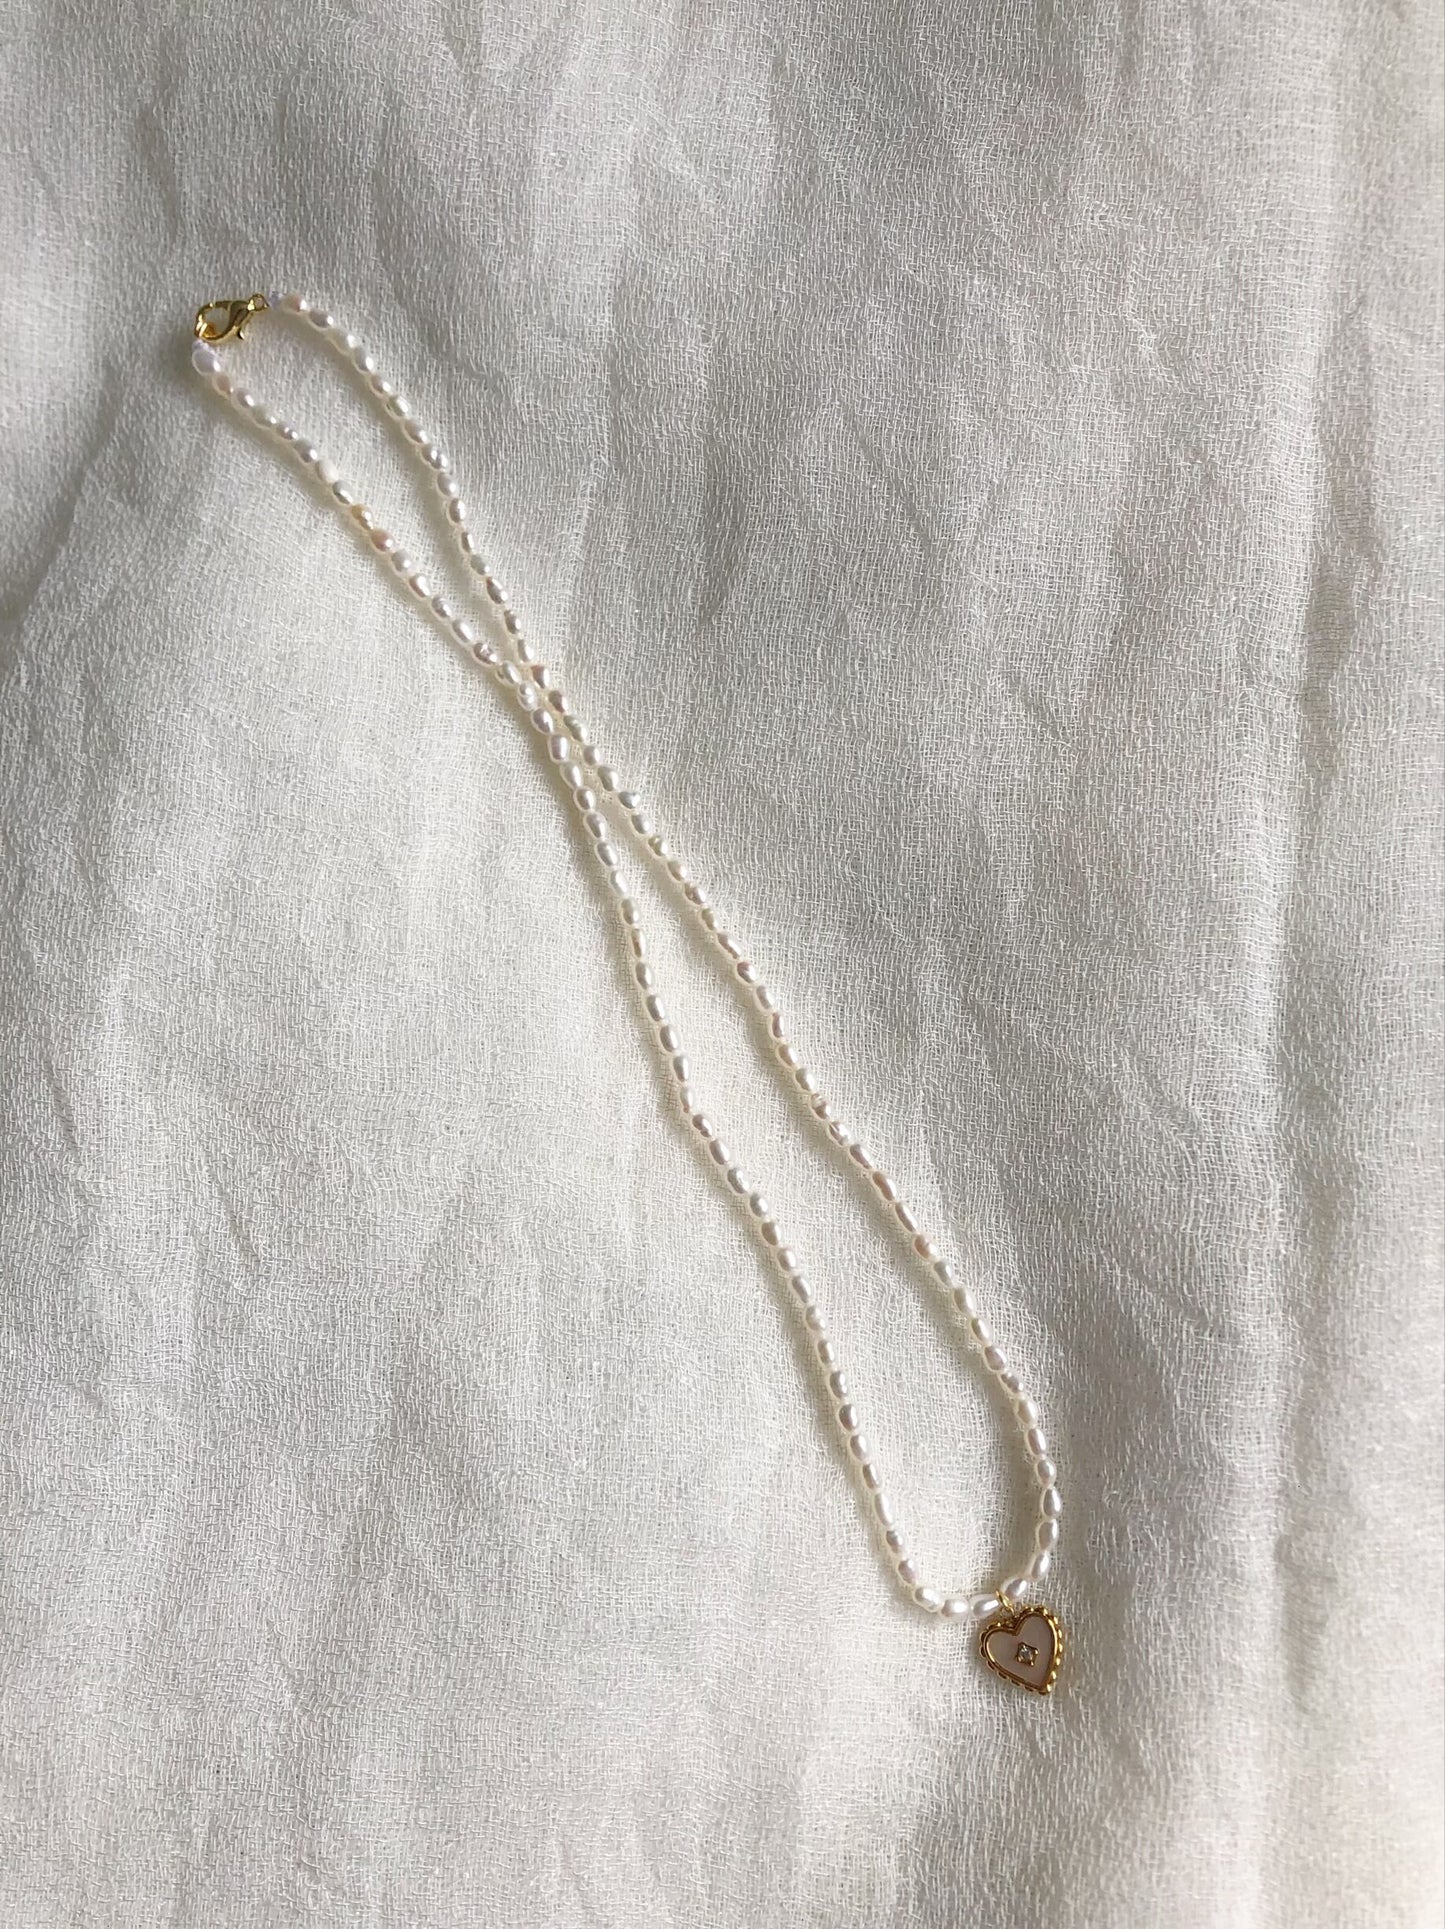 Heart pendant choker, keshi necklace, mother pearl necklace, keshi choker